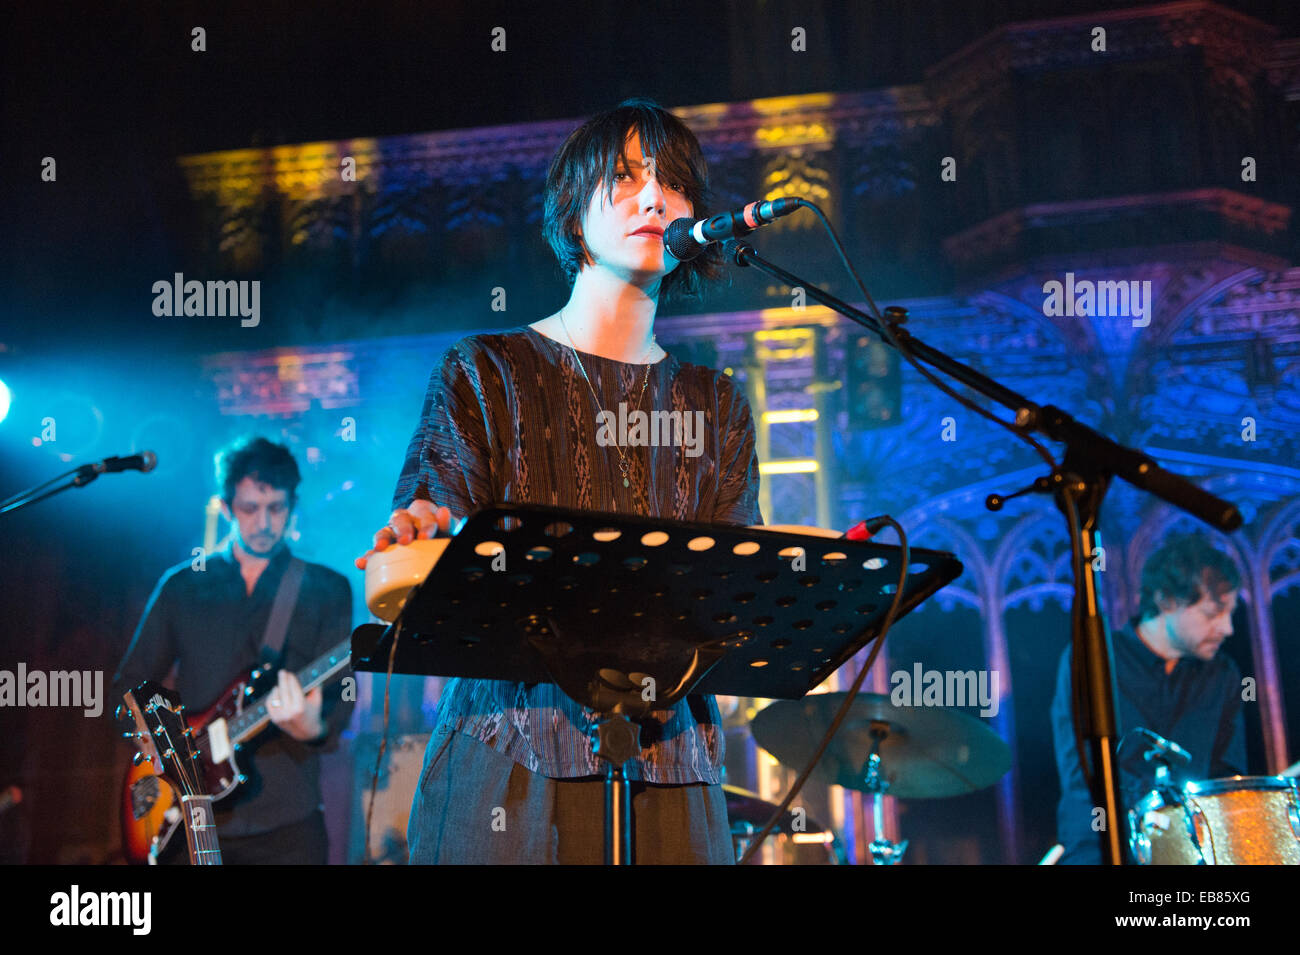 American singer songwriter Sharon Van Etten in concert at Manchester Cathedral, UK, 24 November 2014 Stock Photo